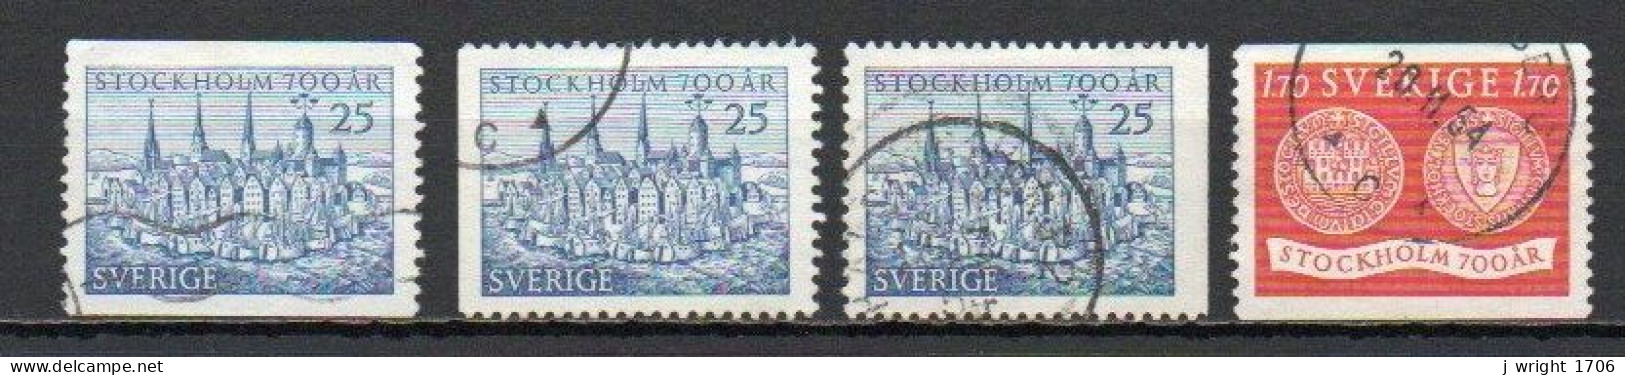 Sweden, 1953, Stockholm 700th Anniv, Set, USED - Gebraucht